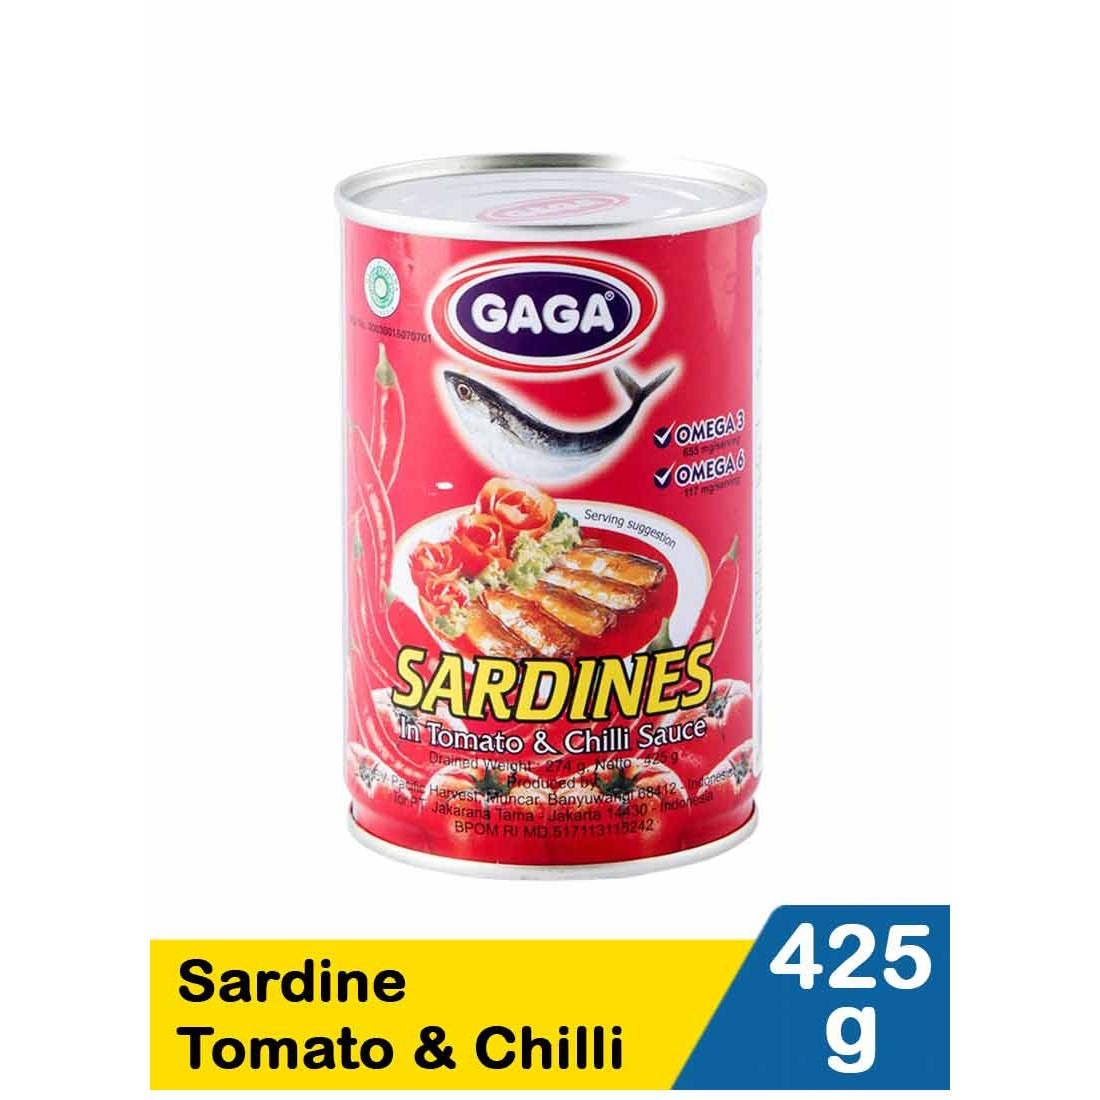 Gaga 425G Sardines Tomat & Chilli